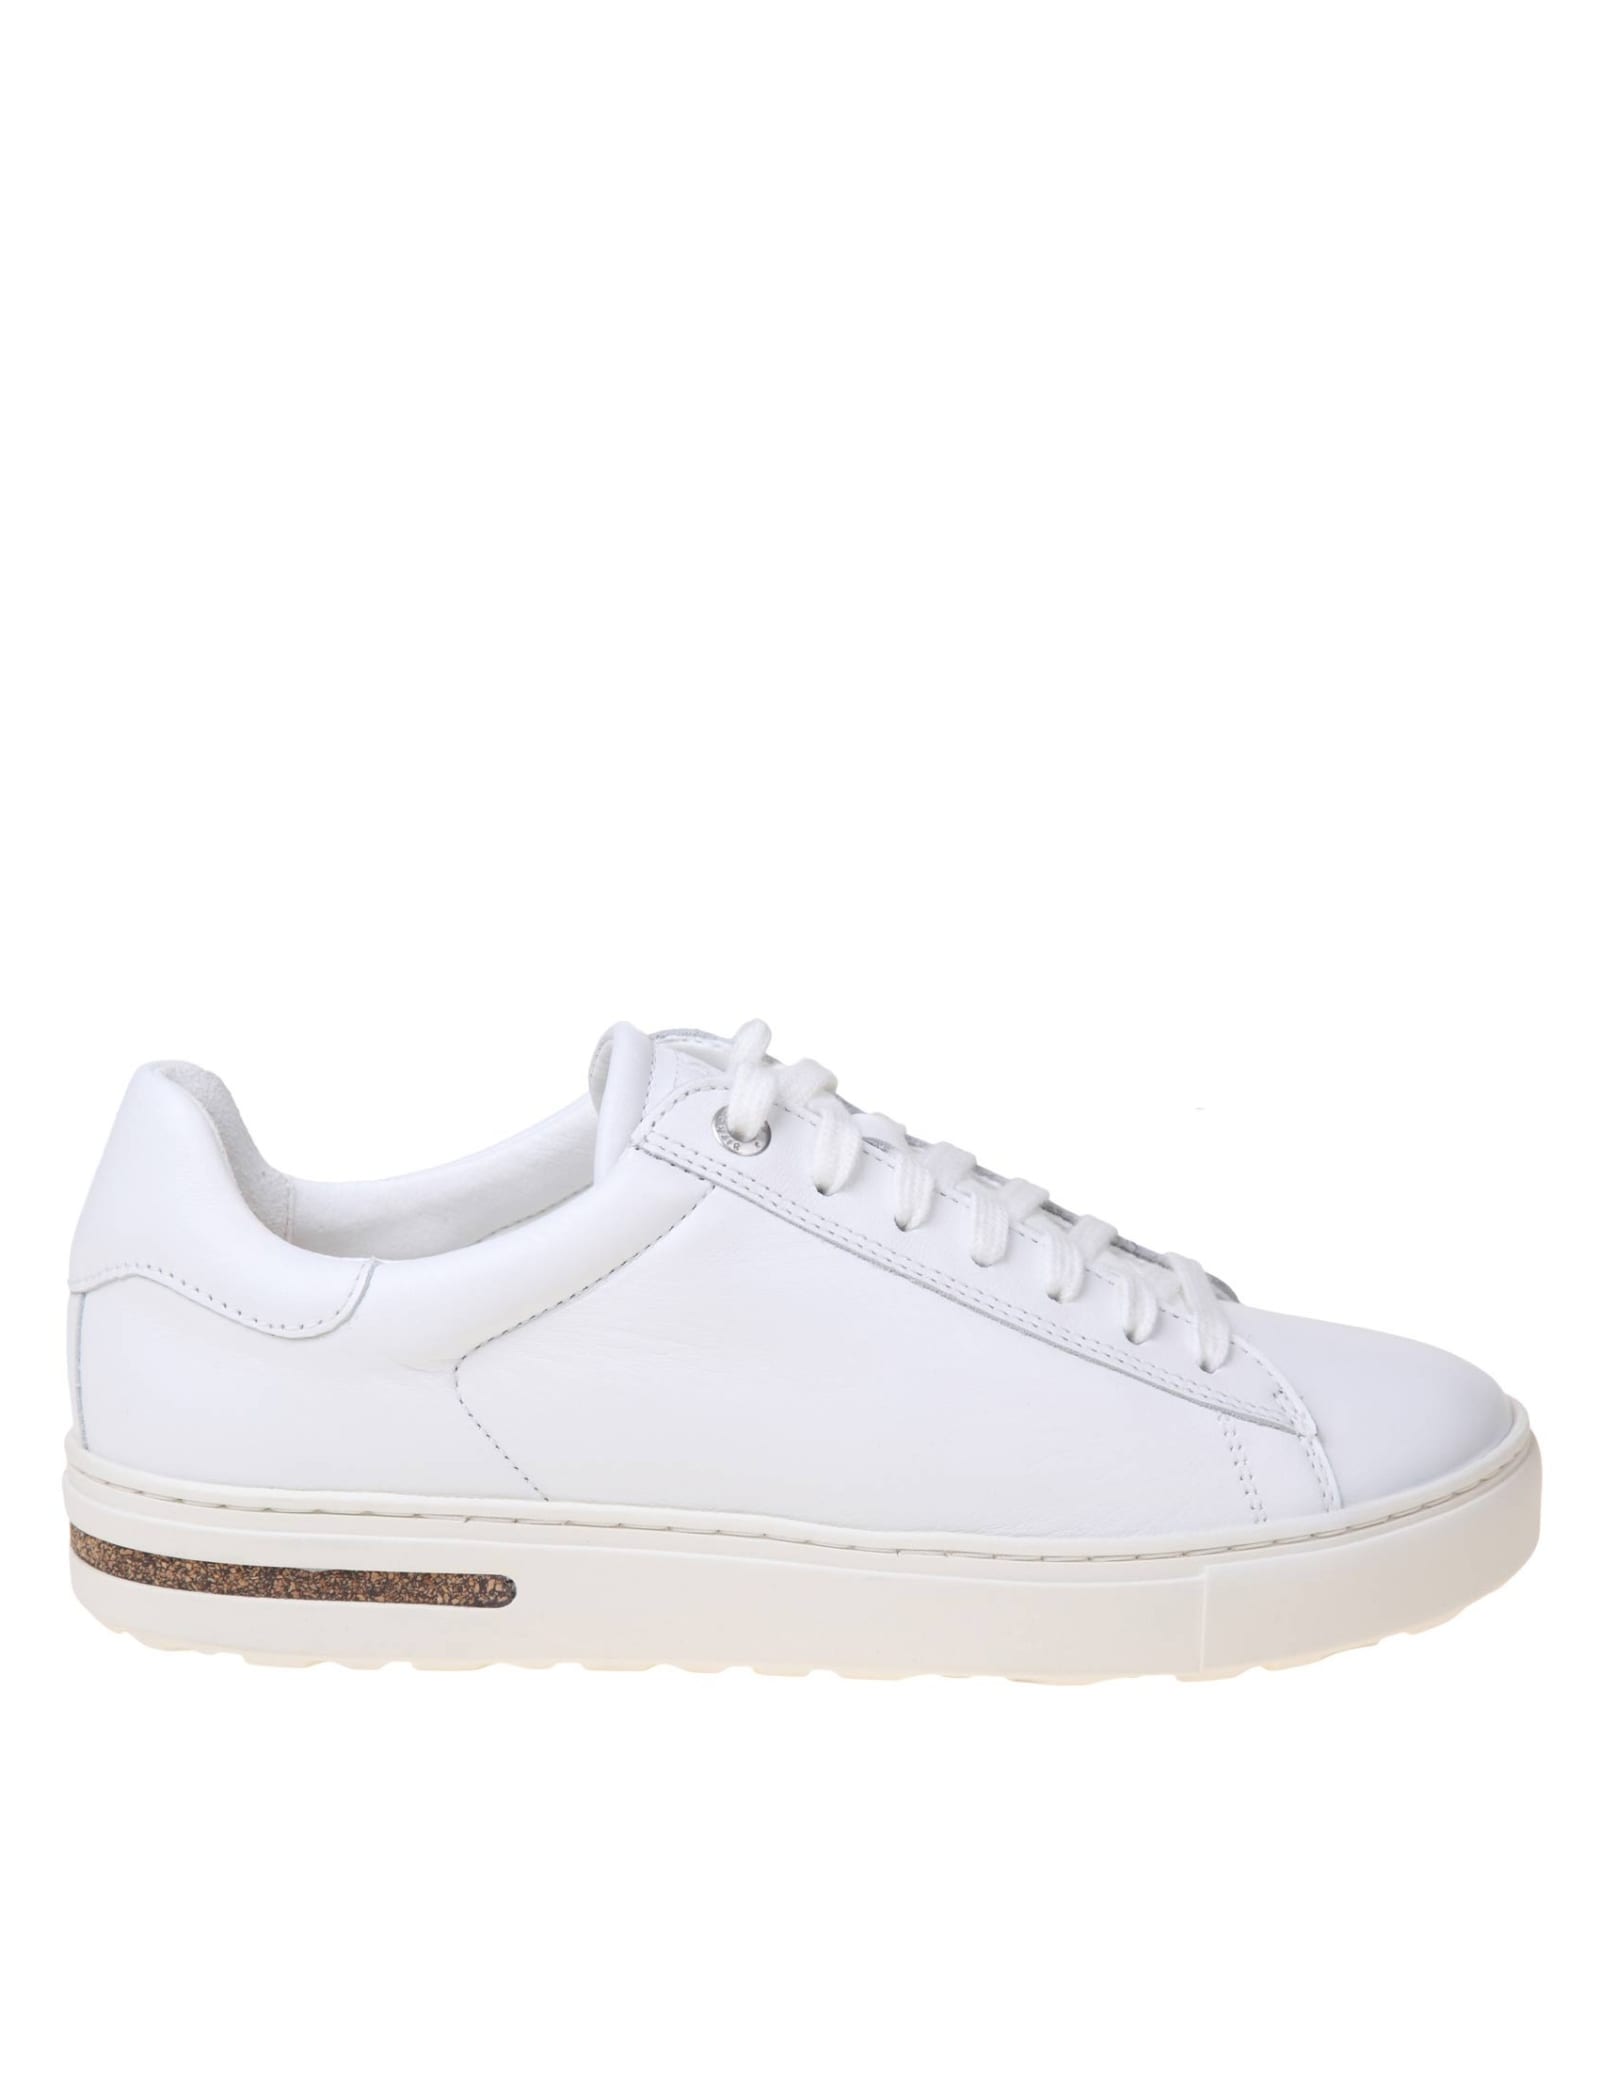 Shop Birkenstock Bend Low Sneakers In White Leather